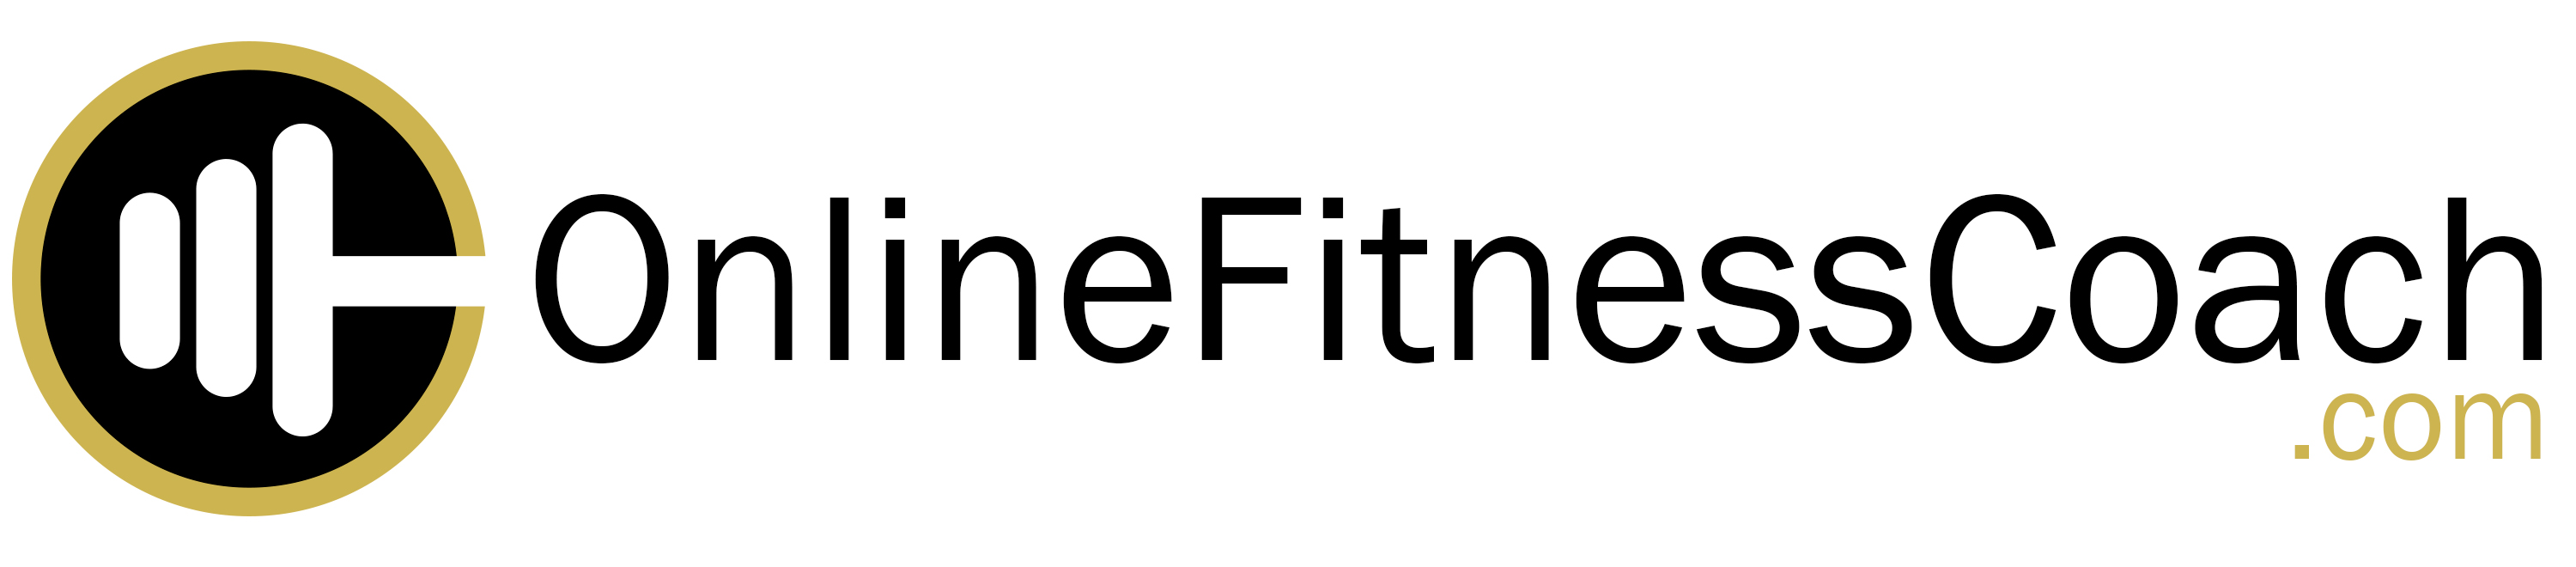 Online Fitness Coach, LLC's Logo